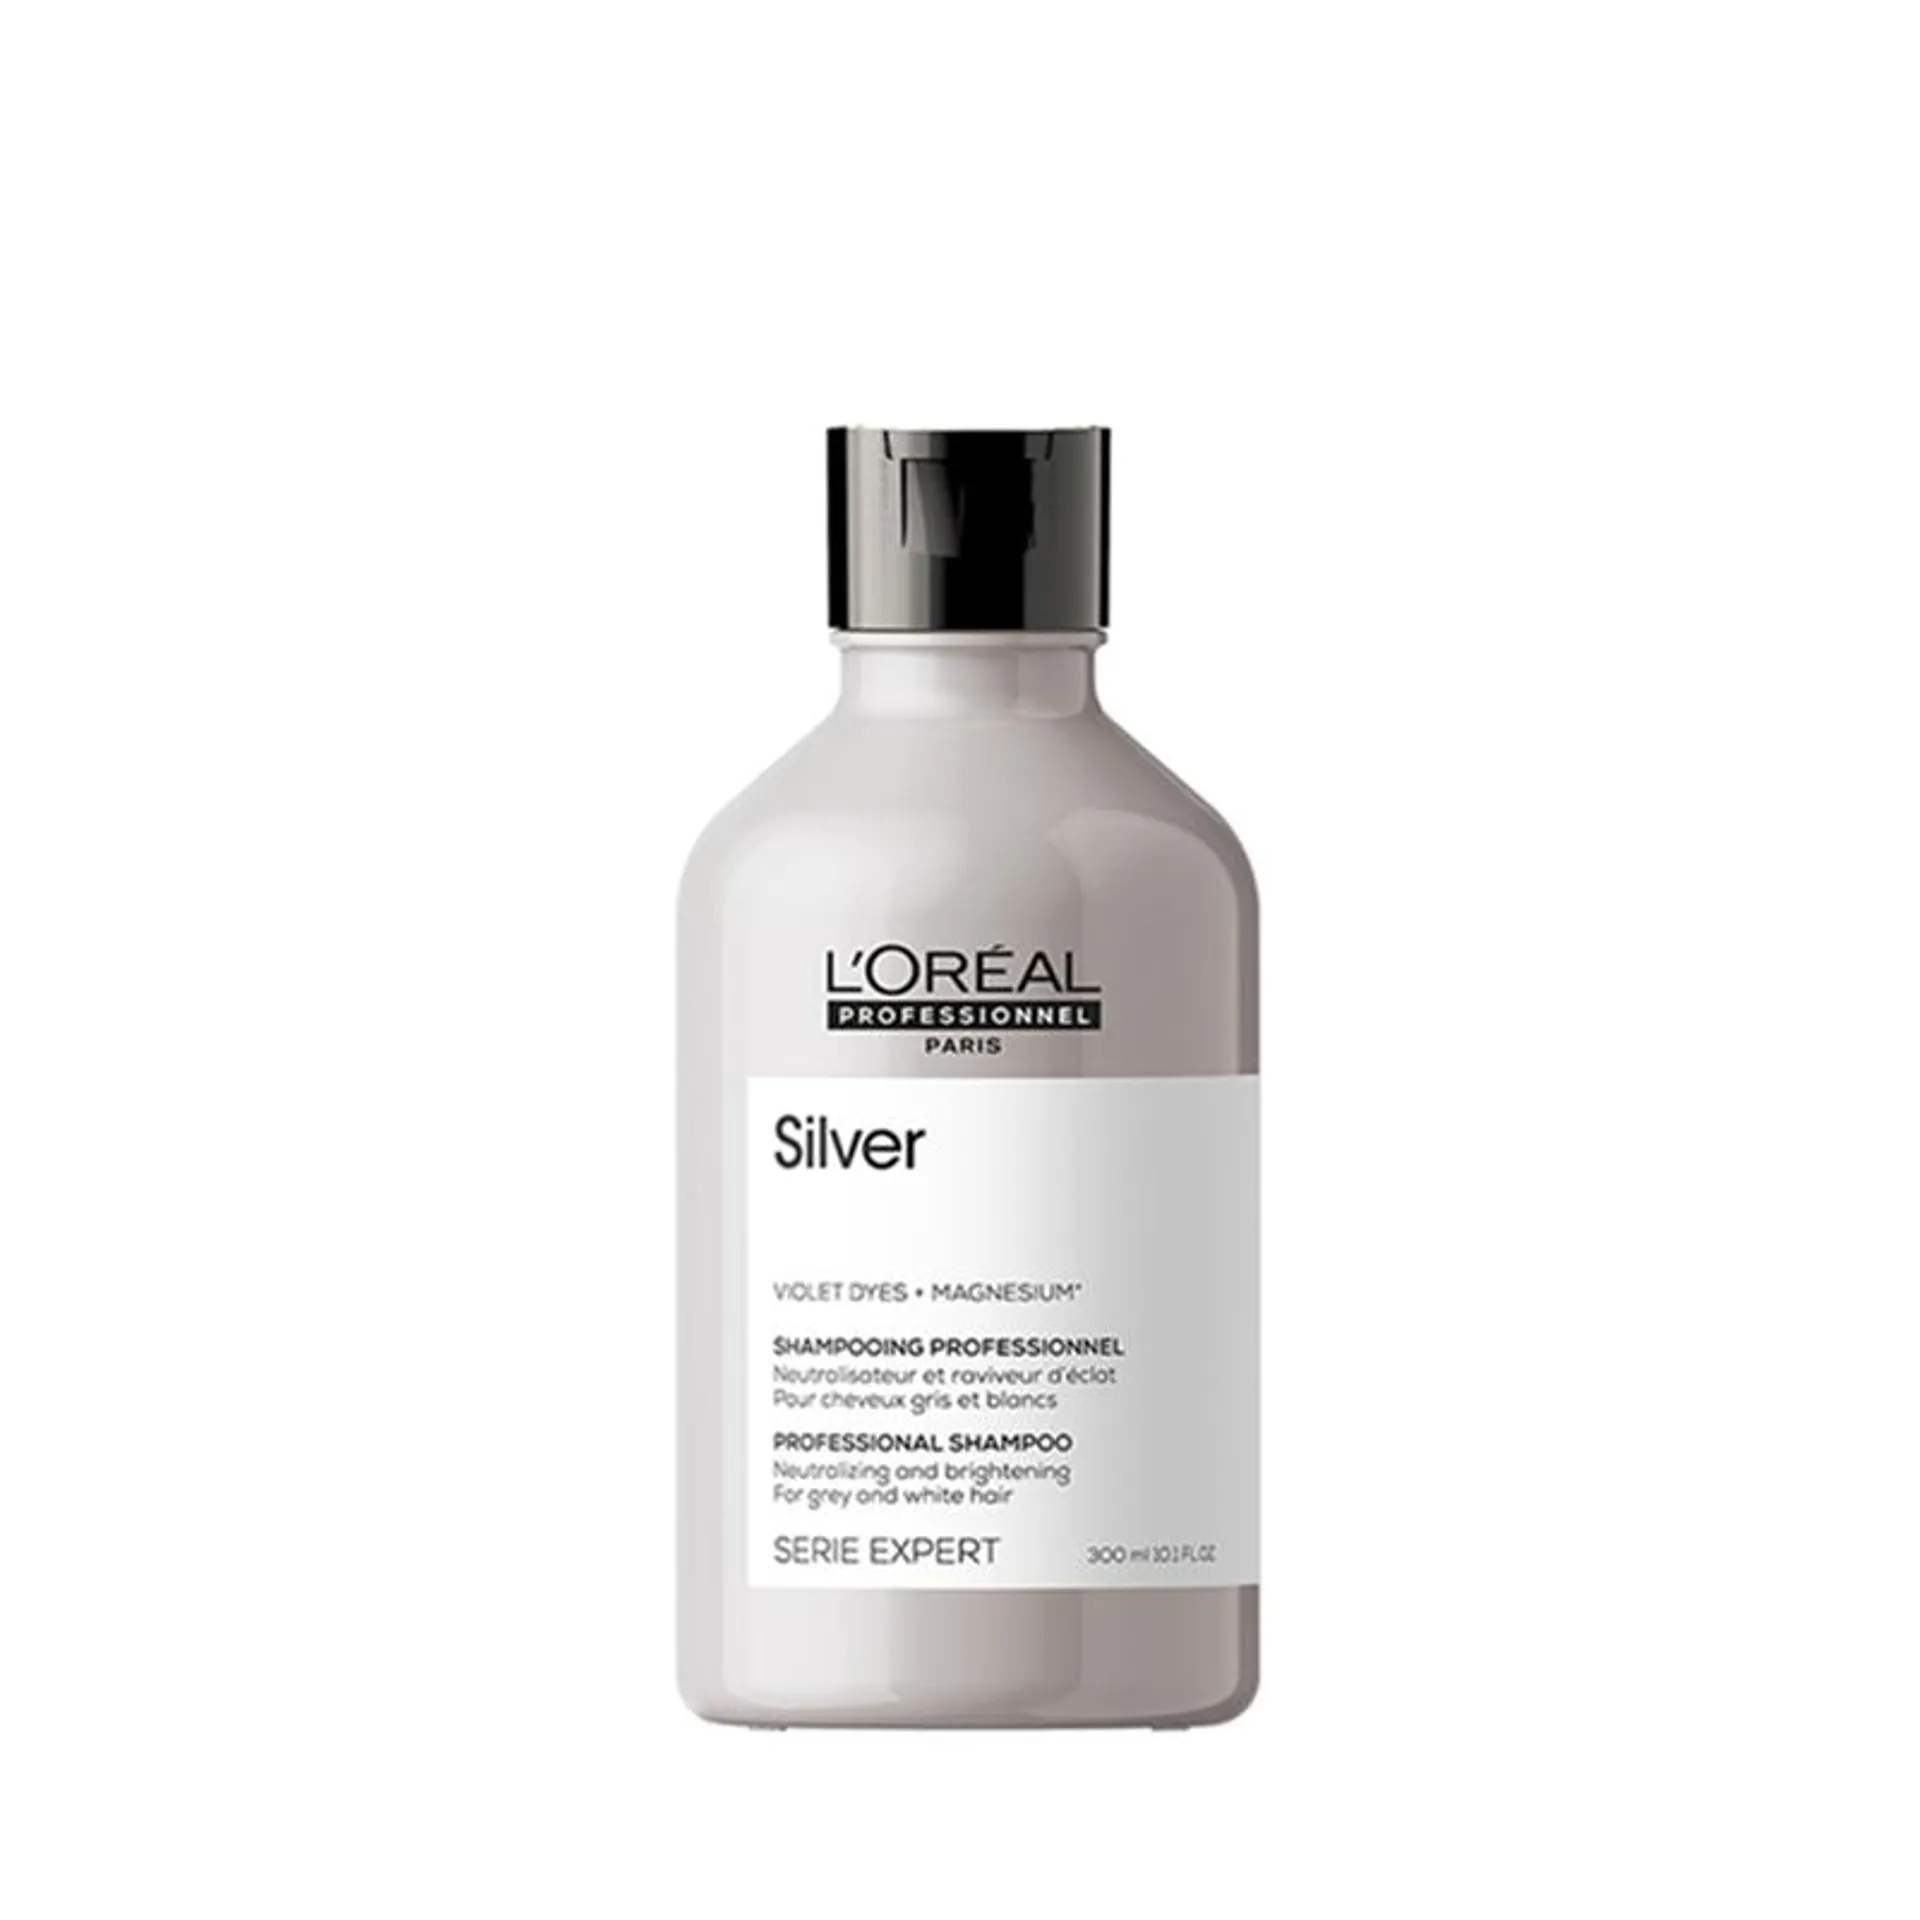 Silver Shampooing - 300ml